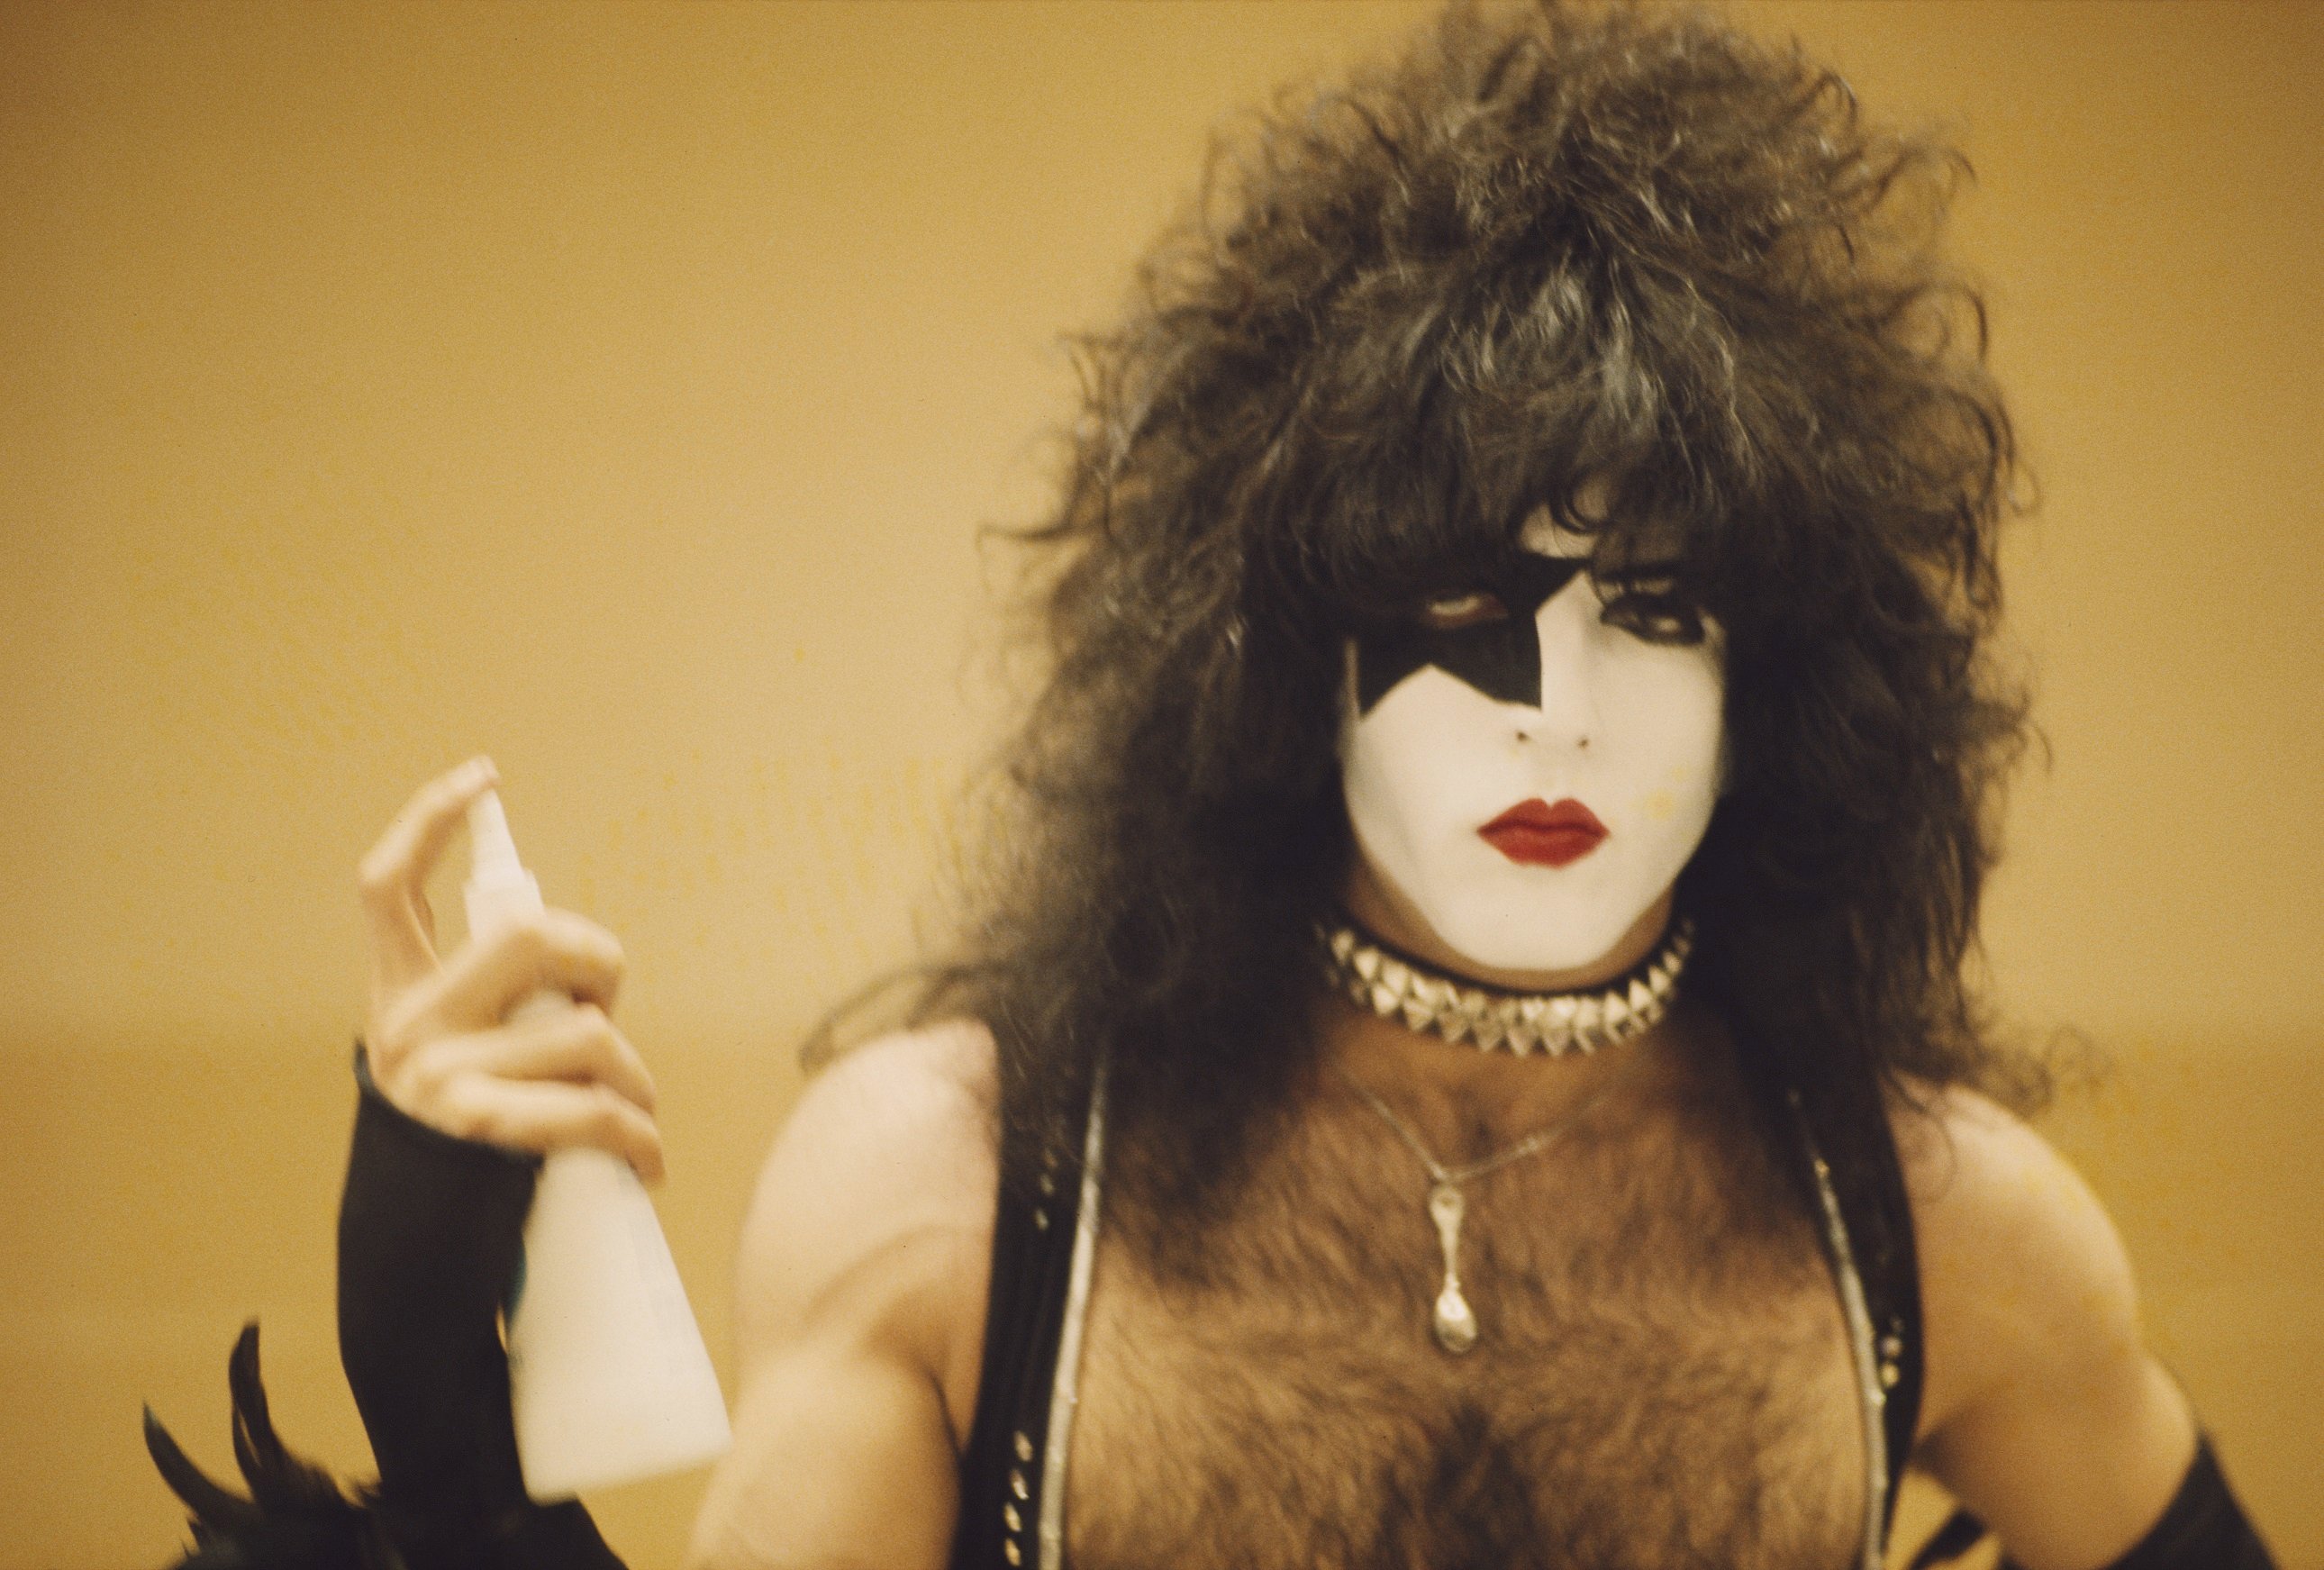 Paul Stanley of Kiss in makeup